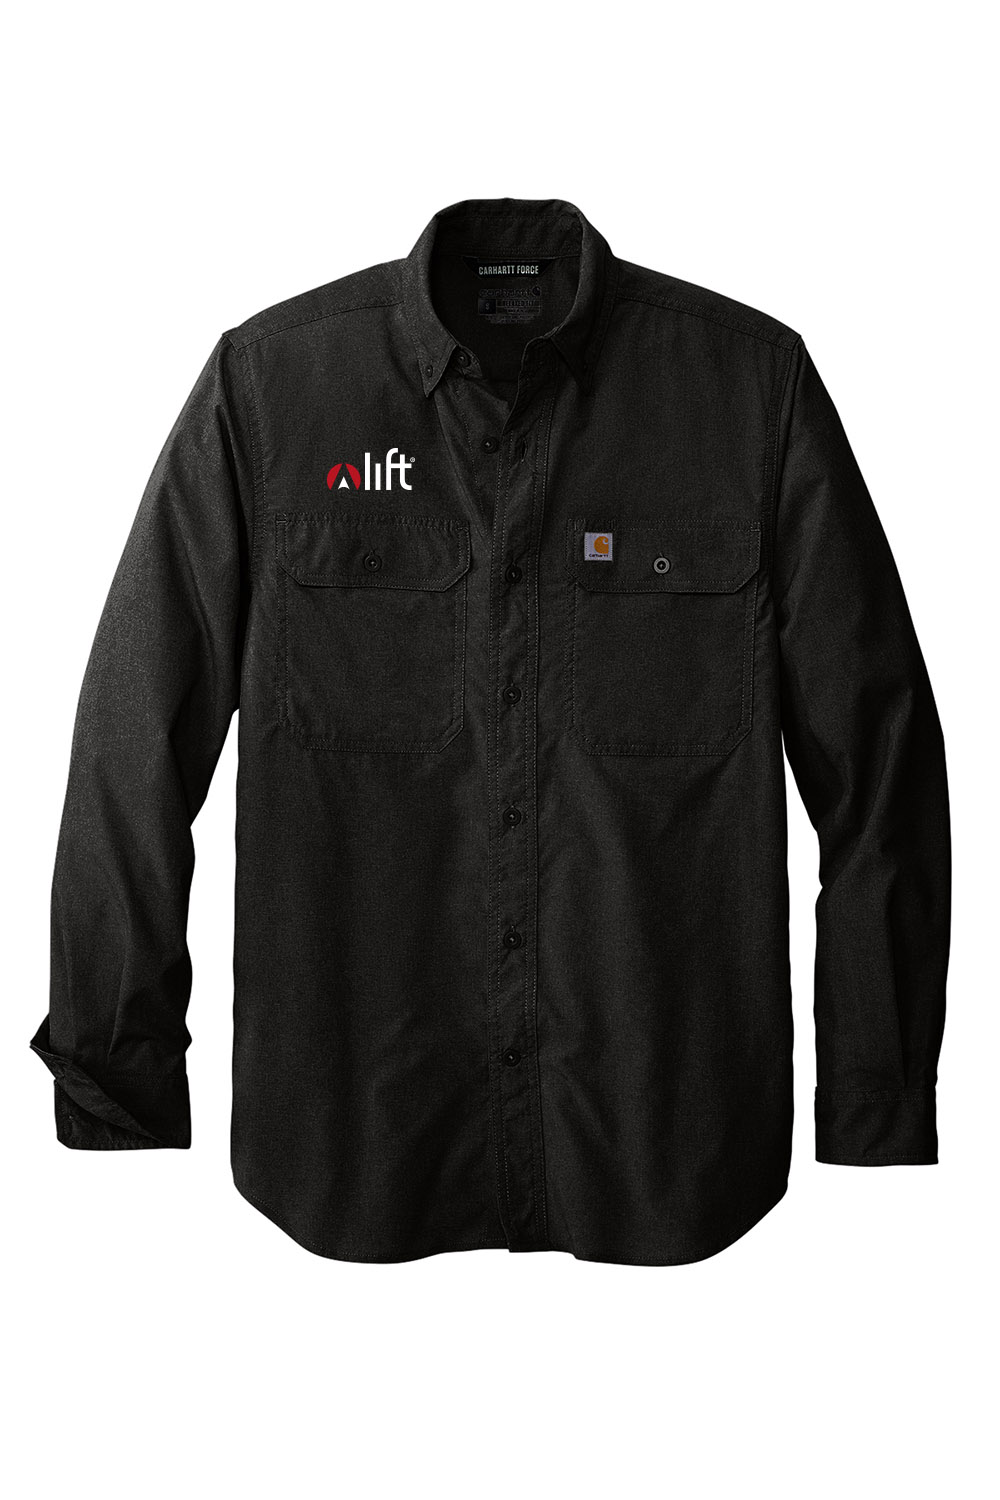 Carhartt Force® Solid Long Sleeve Shirt